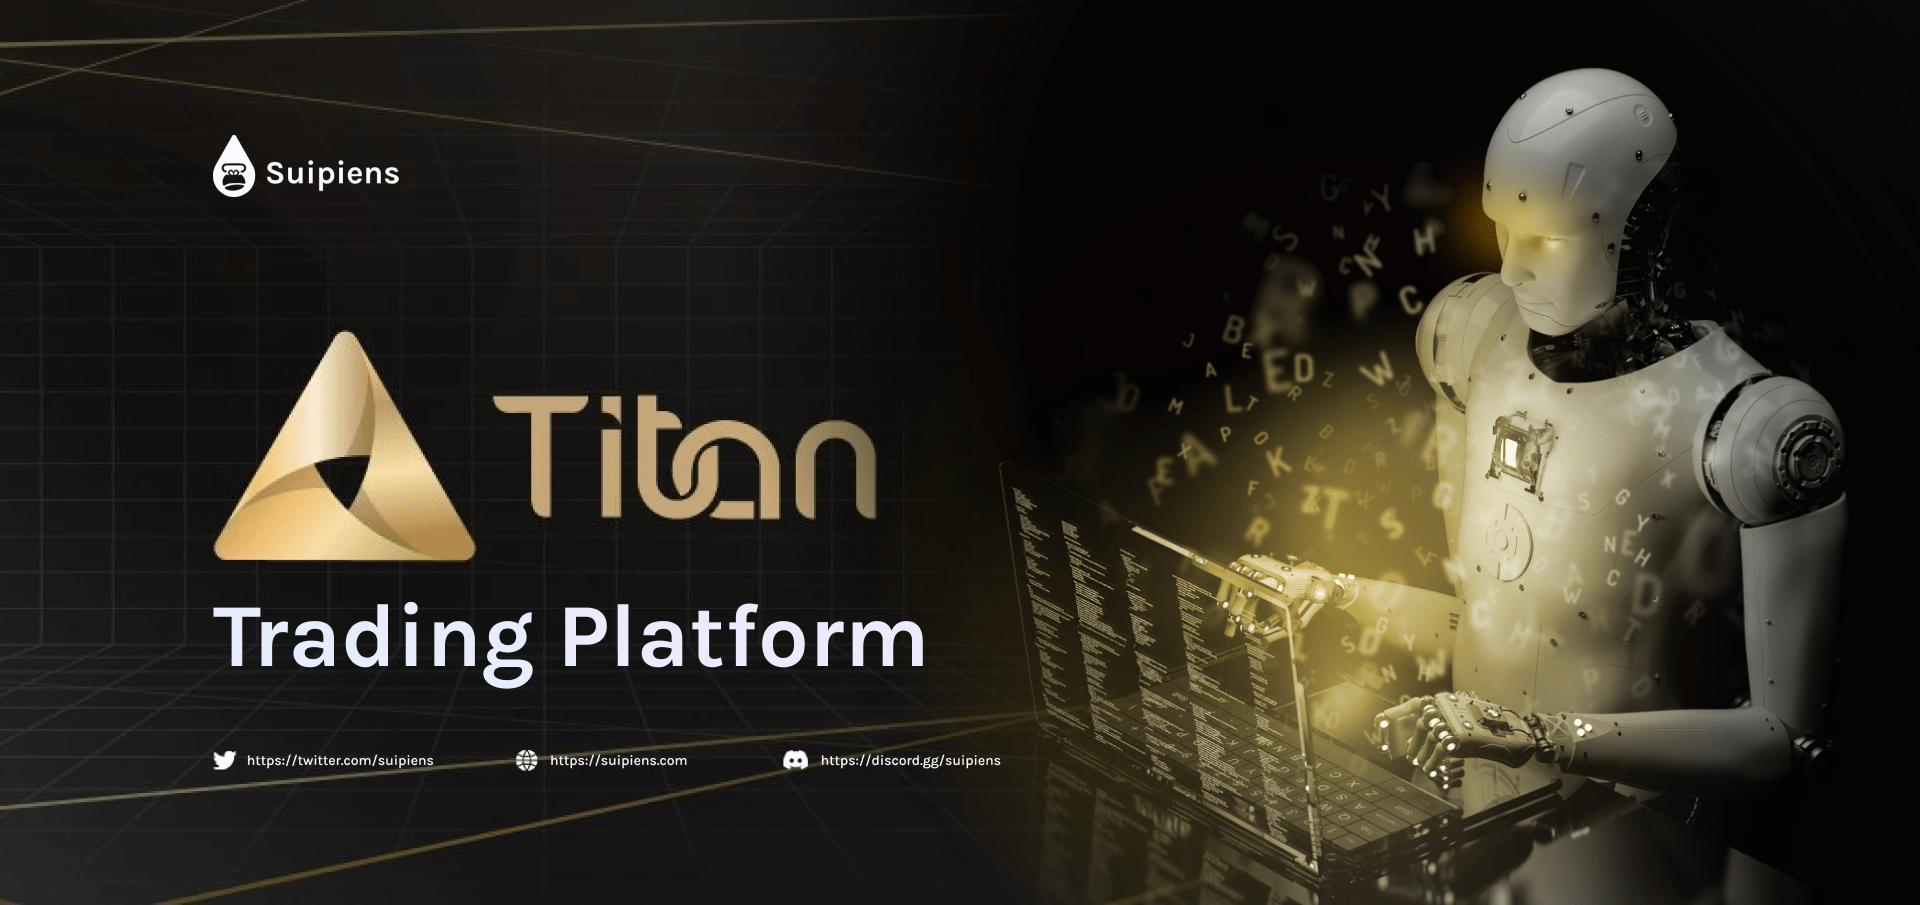 Introduce Titan Trading Platform